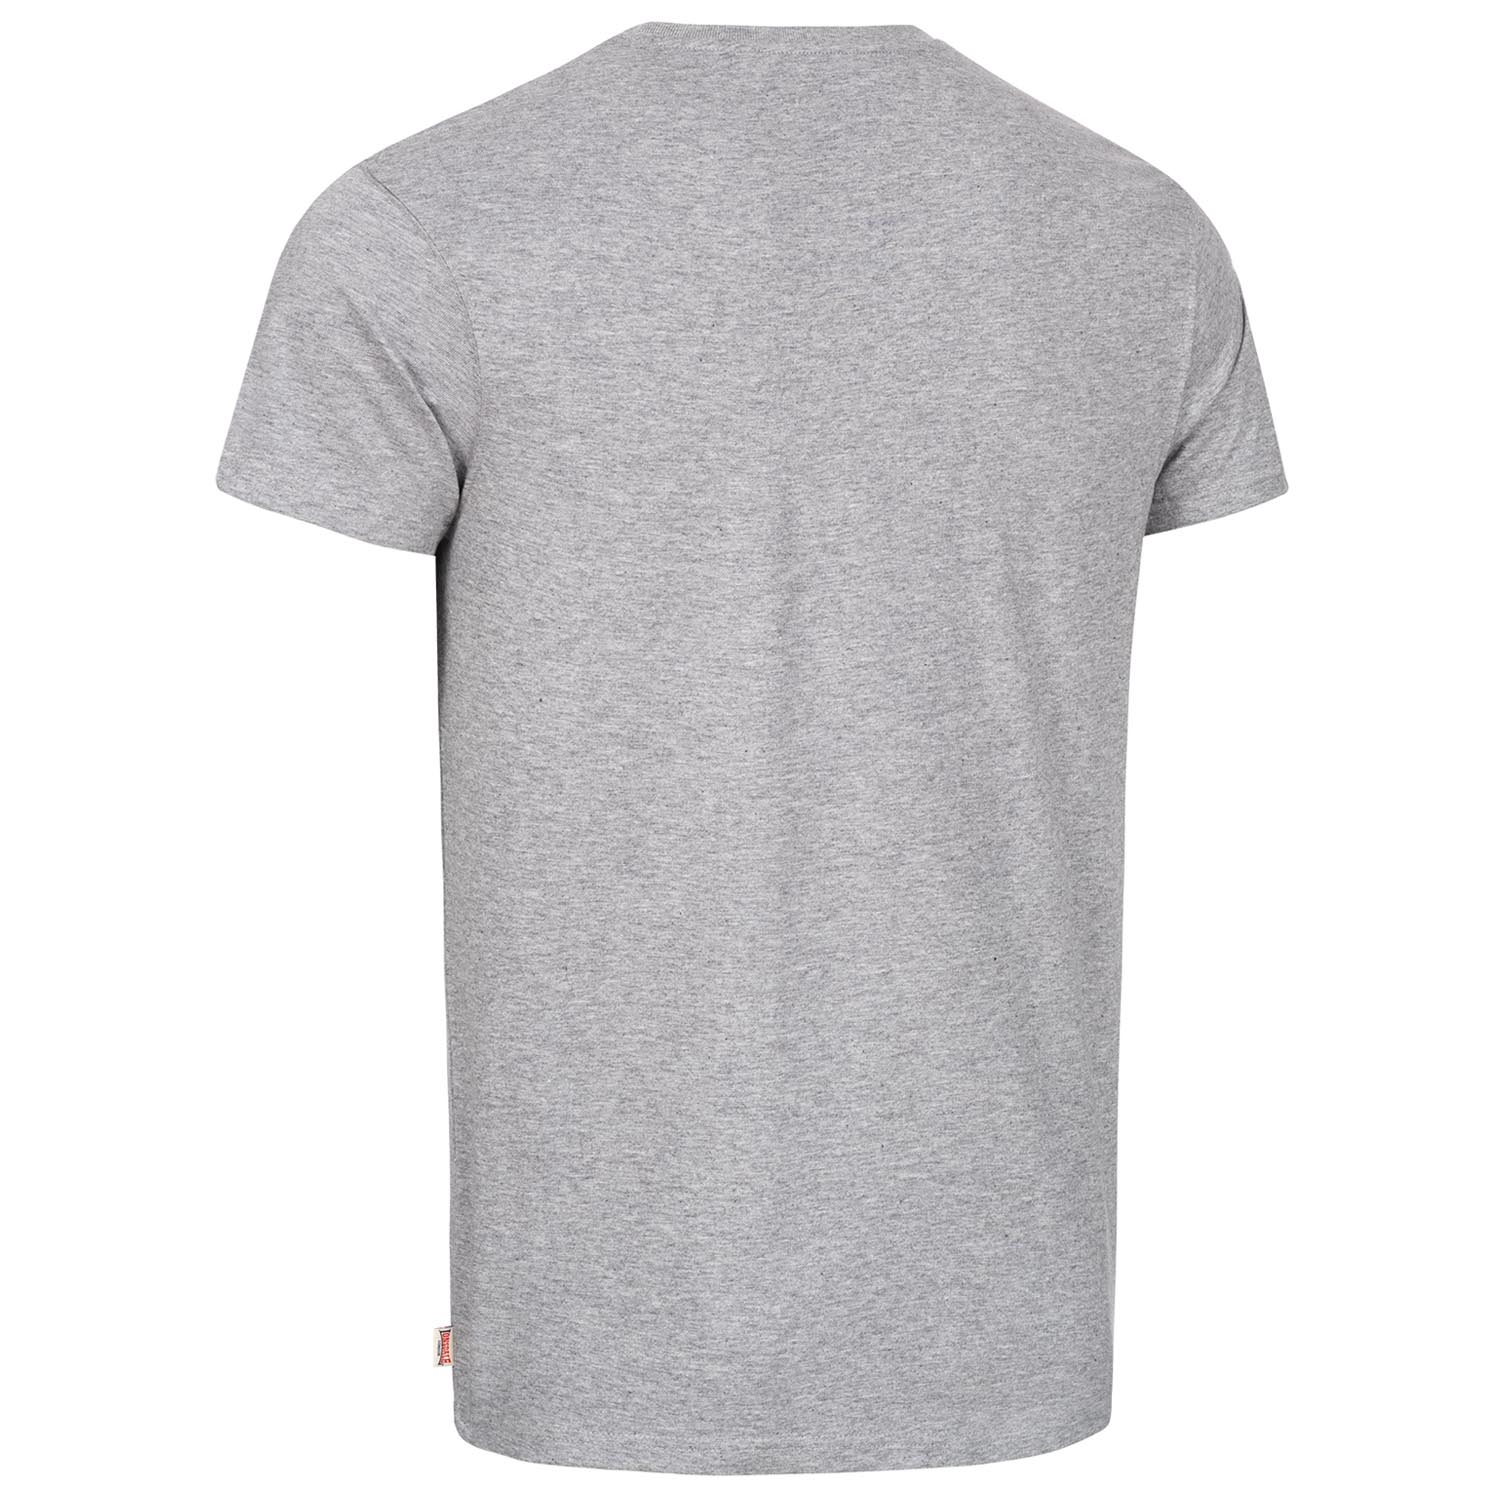 Lonsdale T-Shirt Langsett Grau Mellange